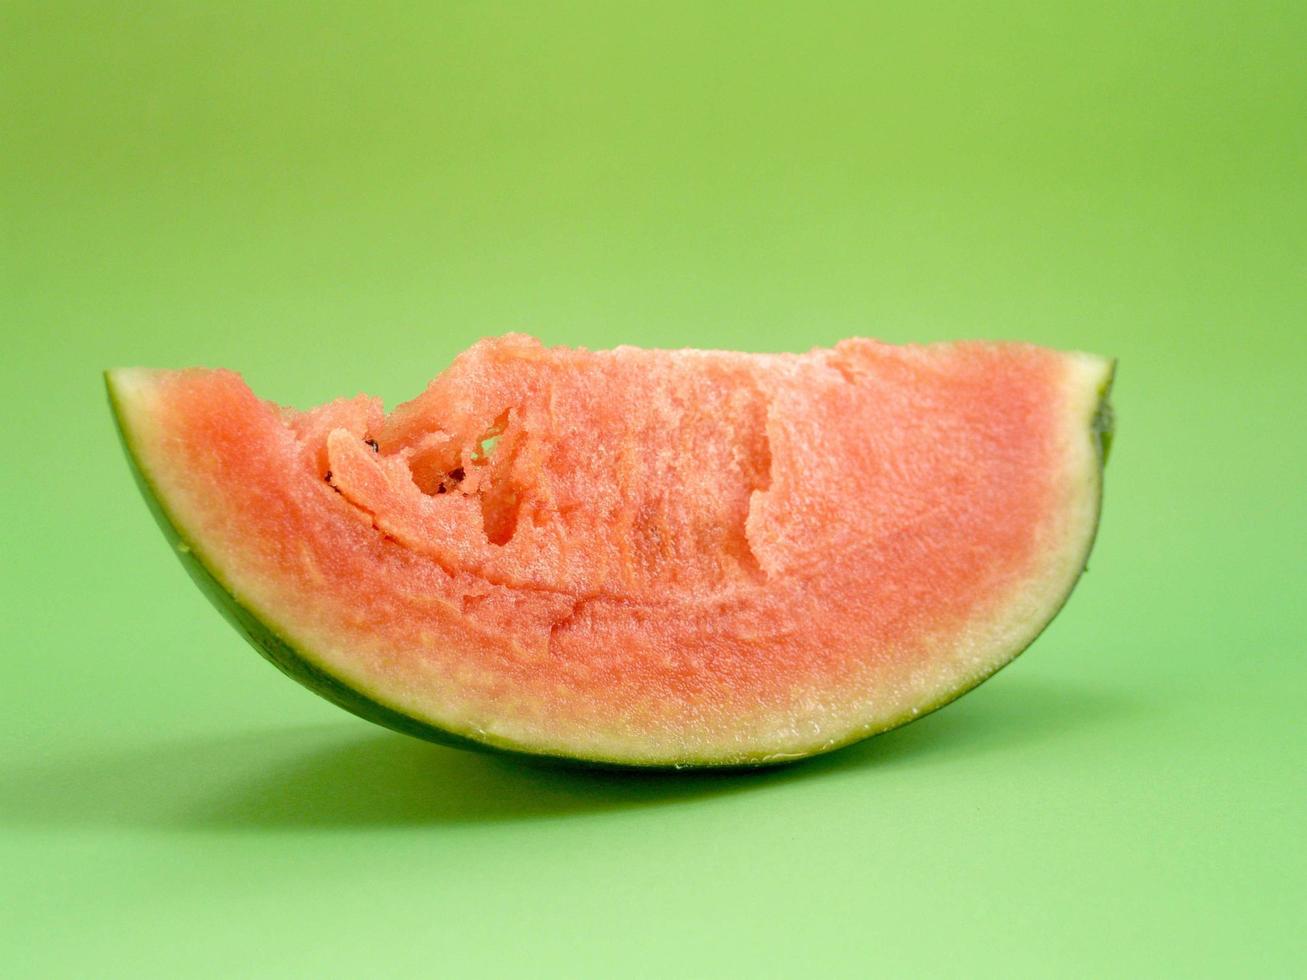 Watermelon slice on green background photo